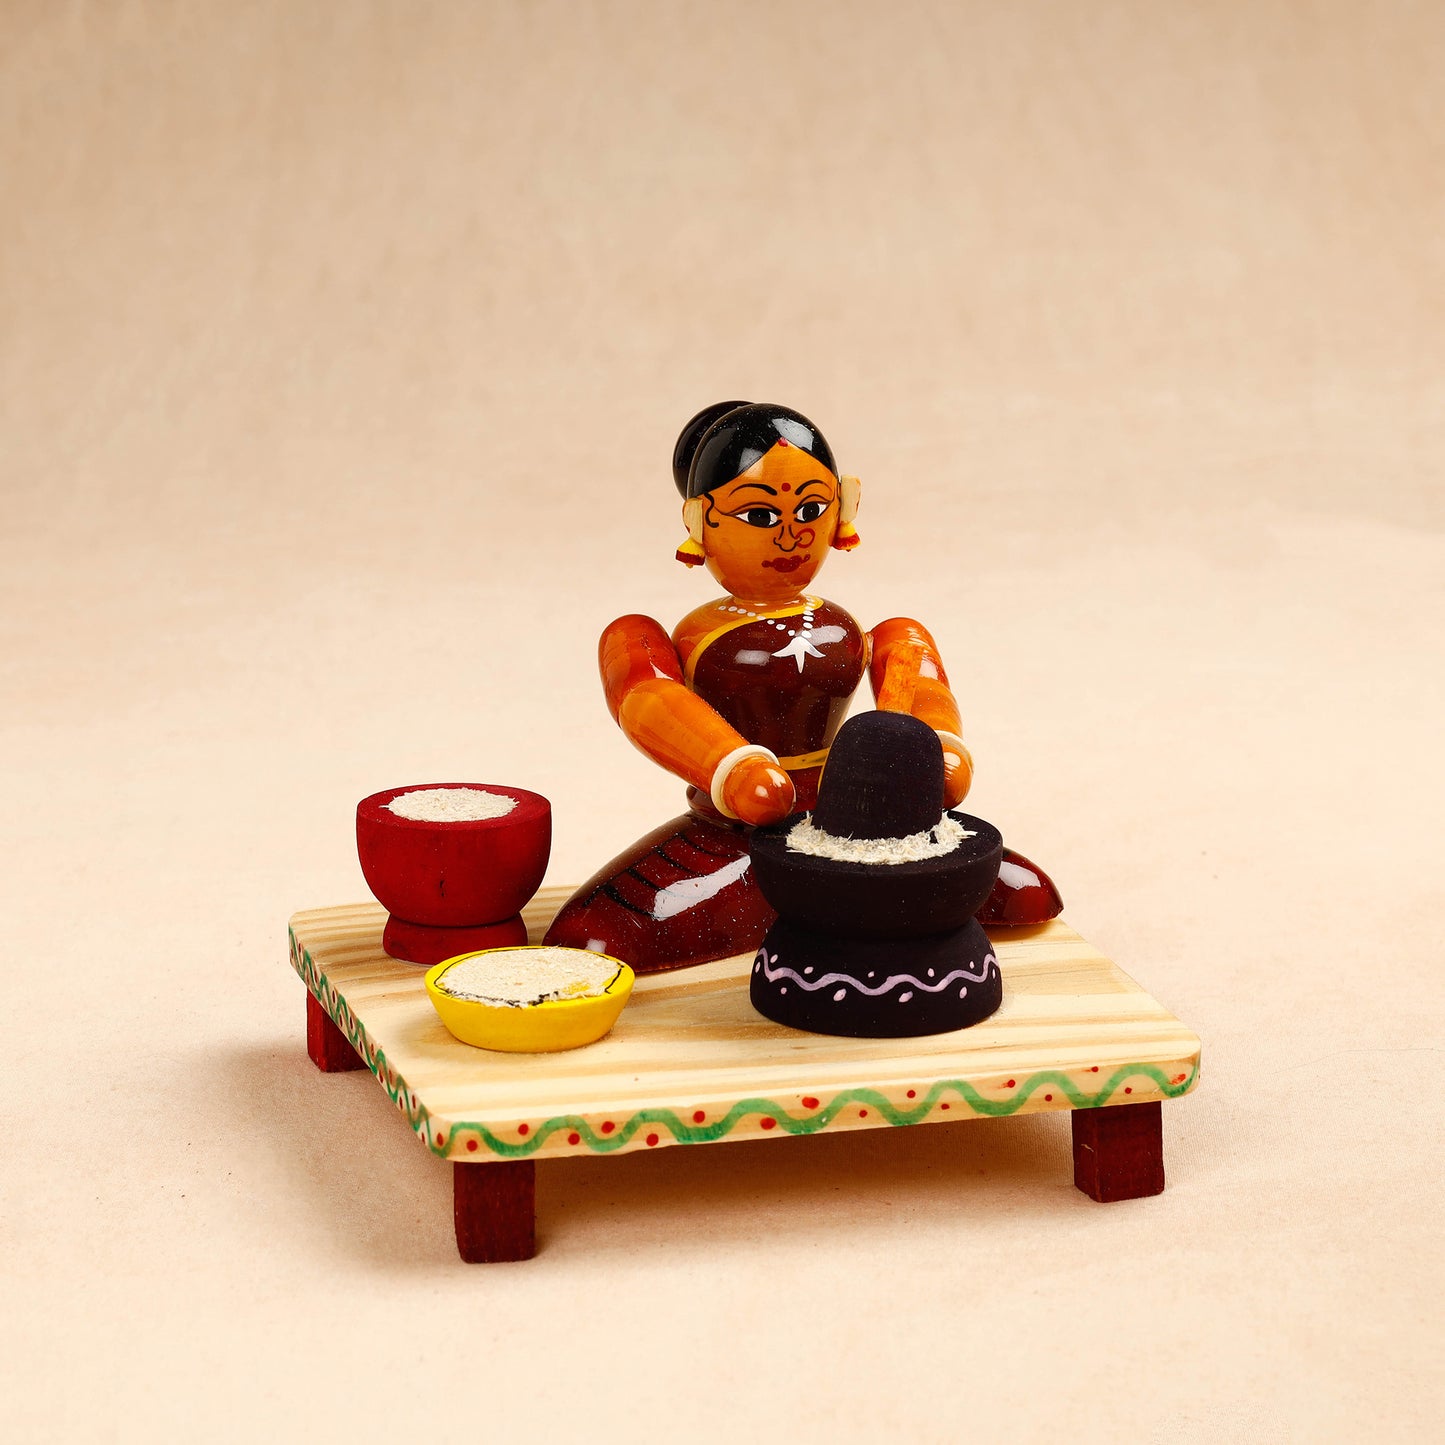 Grinding Women - Etikoppaka Handcrafted Wooden Decor Item